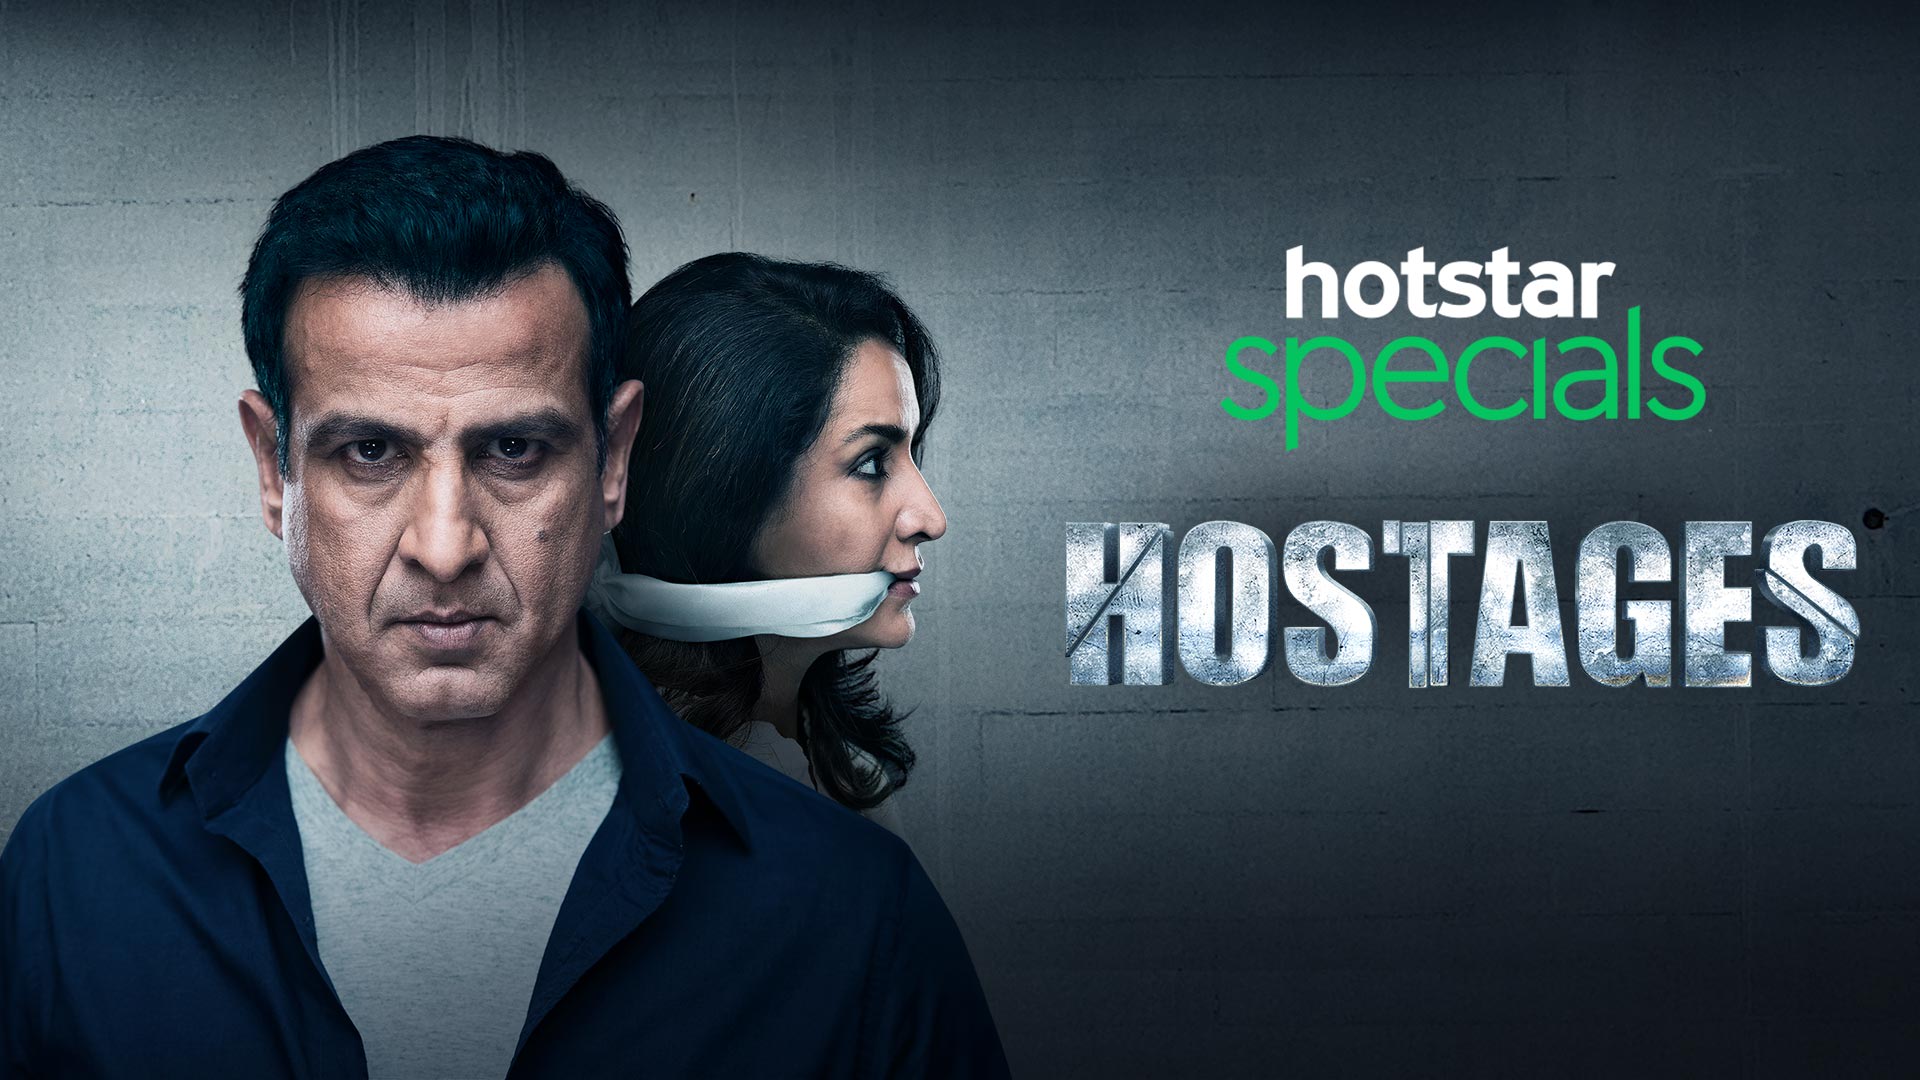 Best Web Series On Hotstar: Hostages